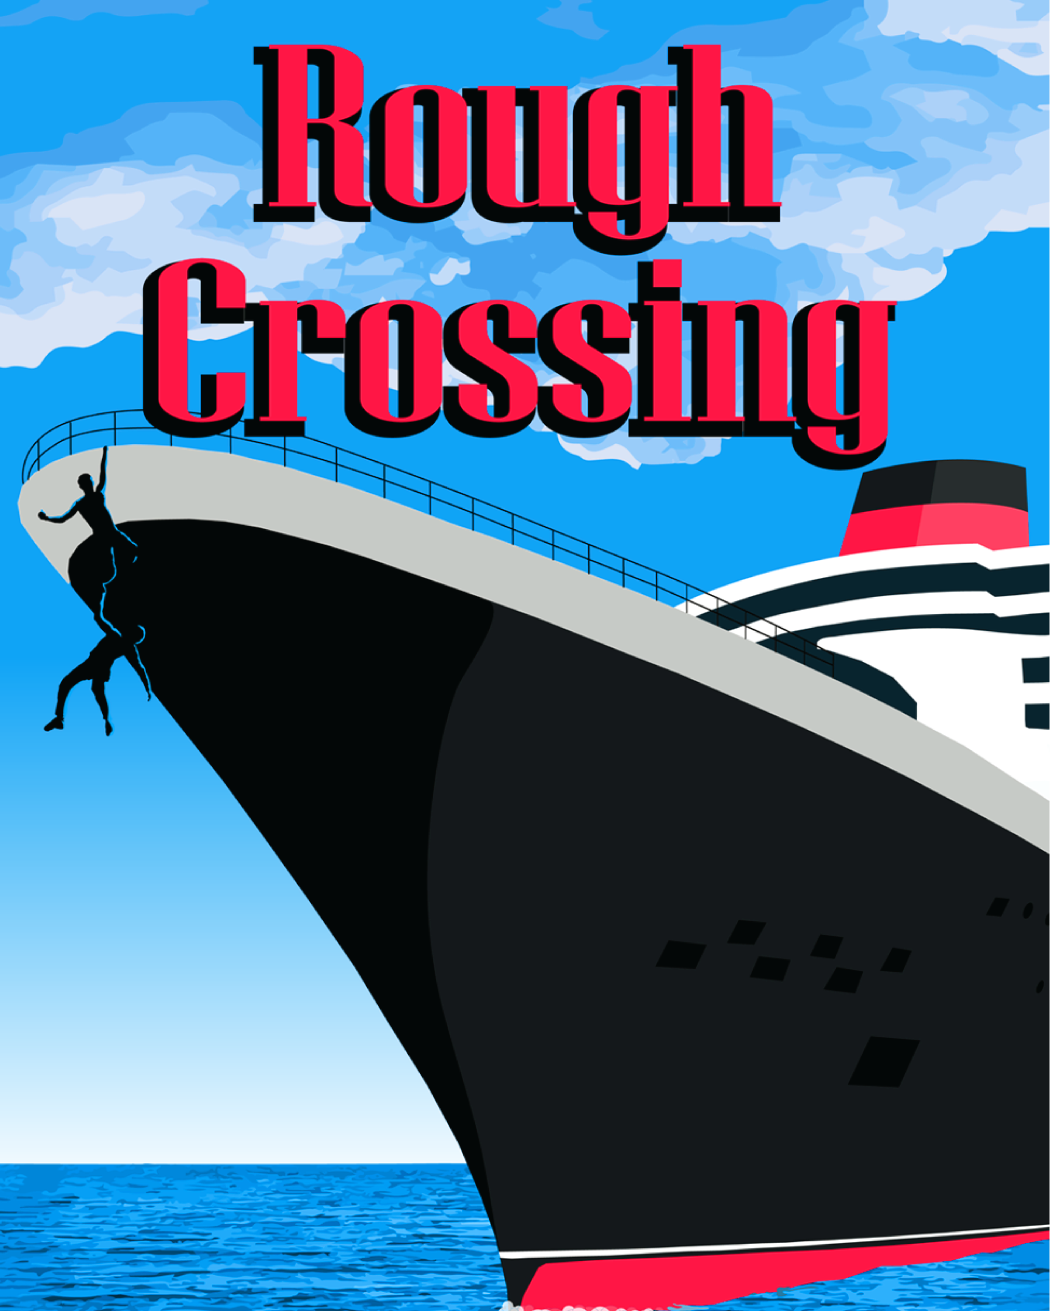 22/23 SEASON: Rough Crossing